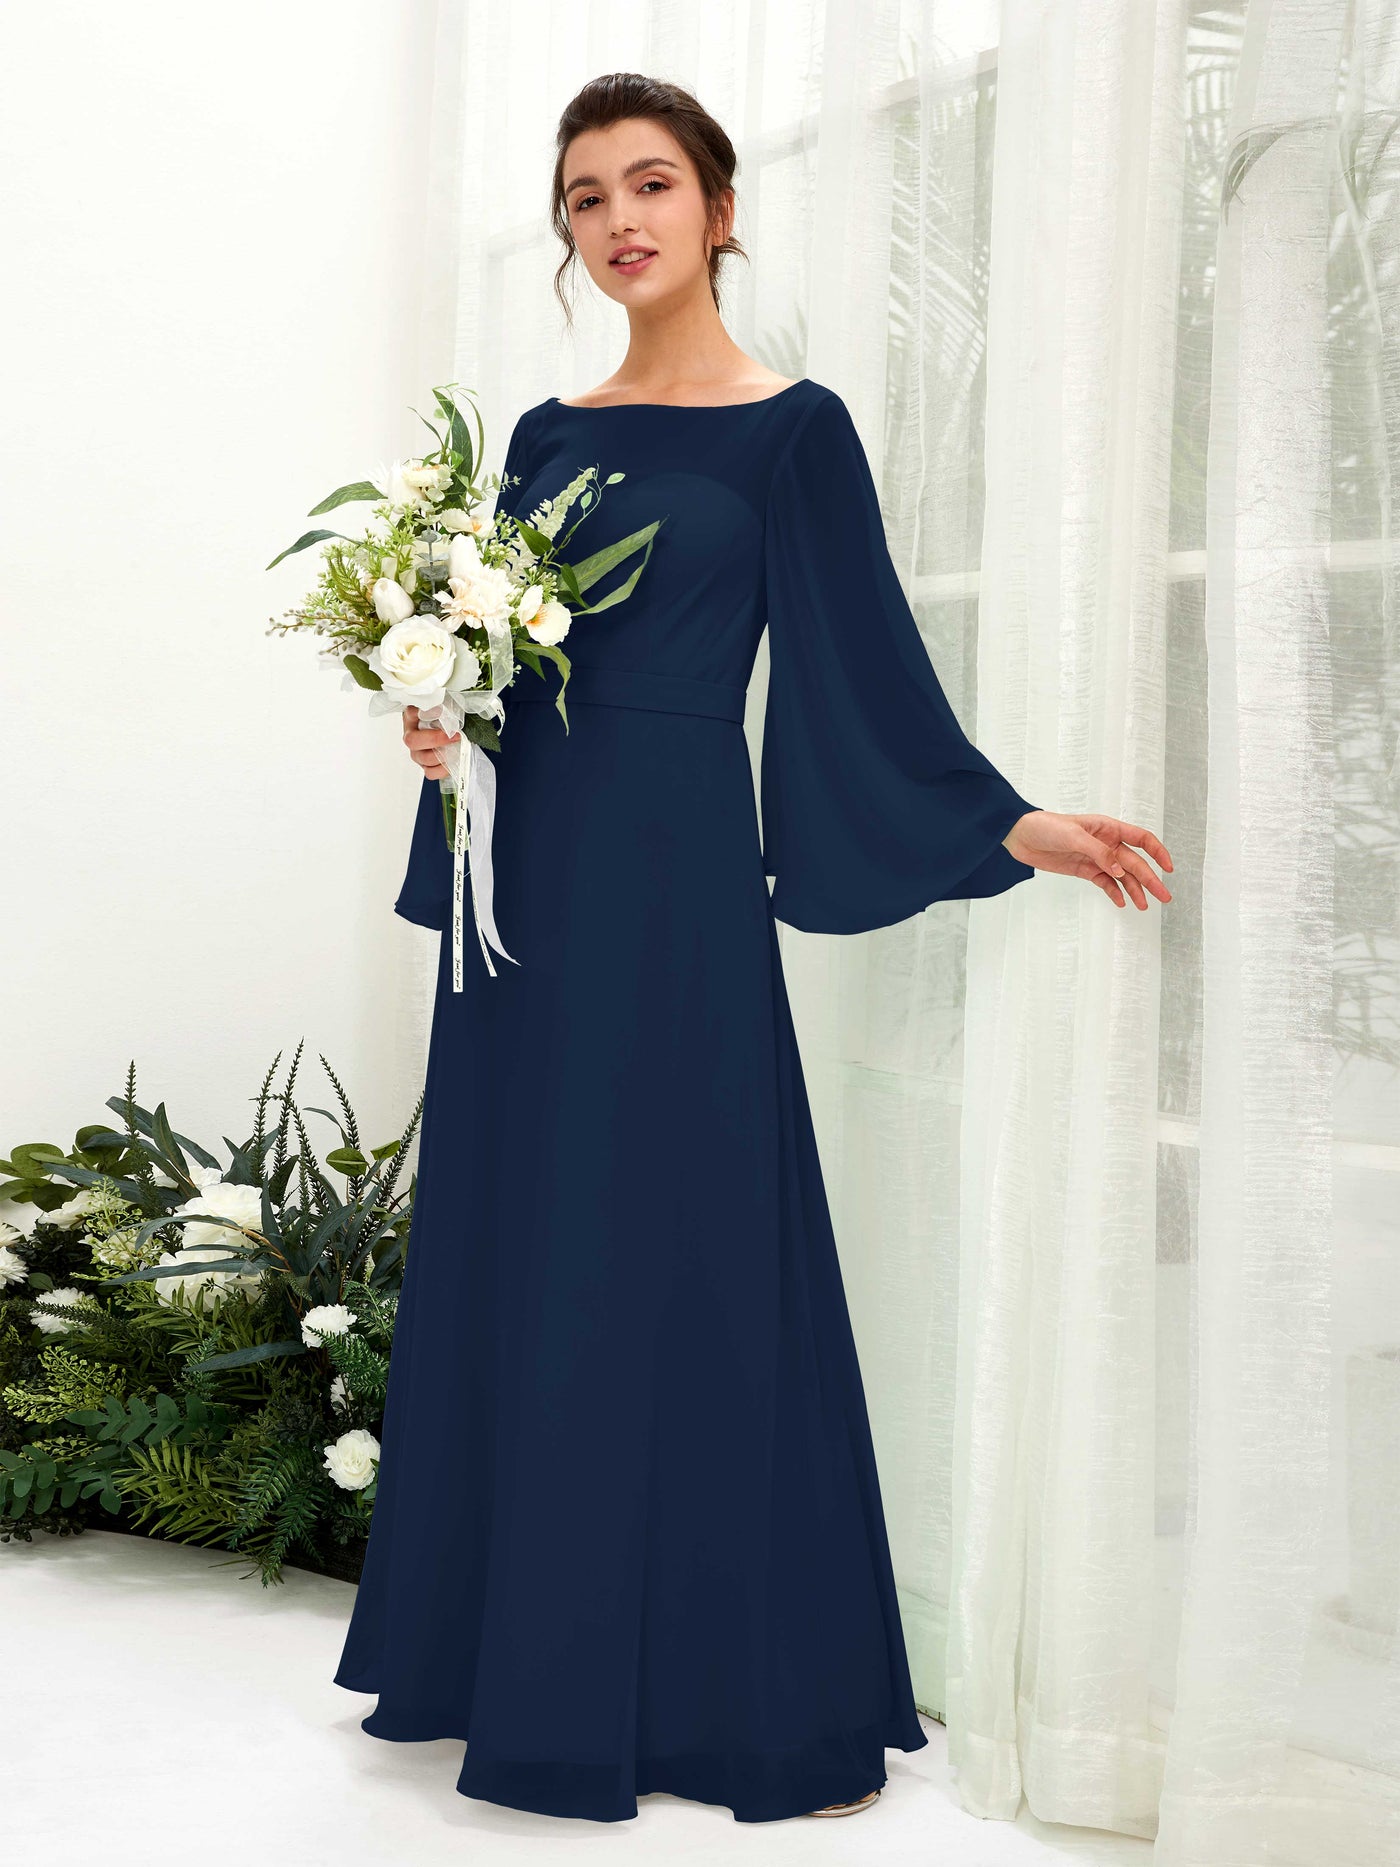 Navy Bridesmaid Dresses Bridesmaid Dress A-line Chiffon Bateau Full Length Long Sleeves Wedding Party Dress (81220513)#color_navy